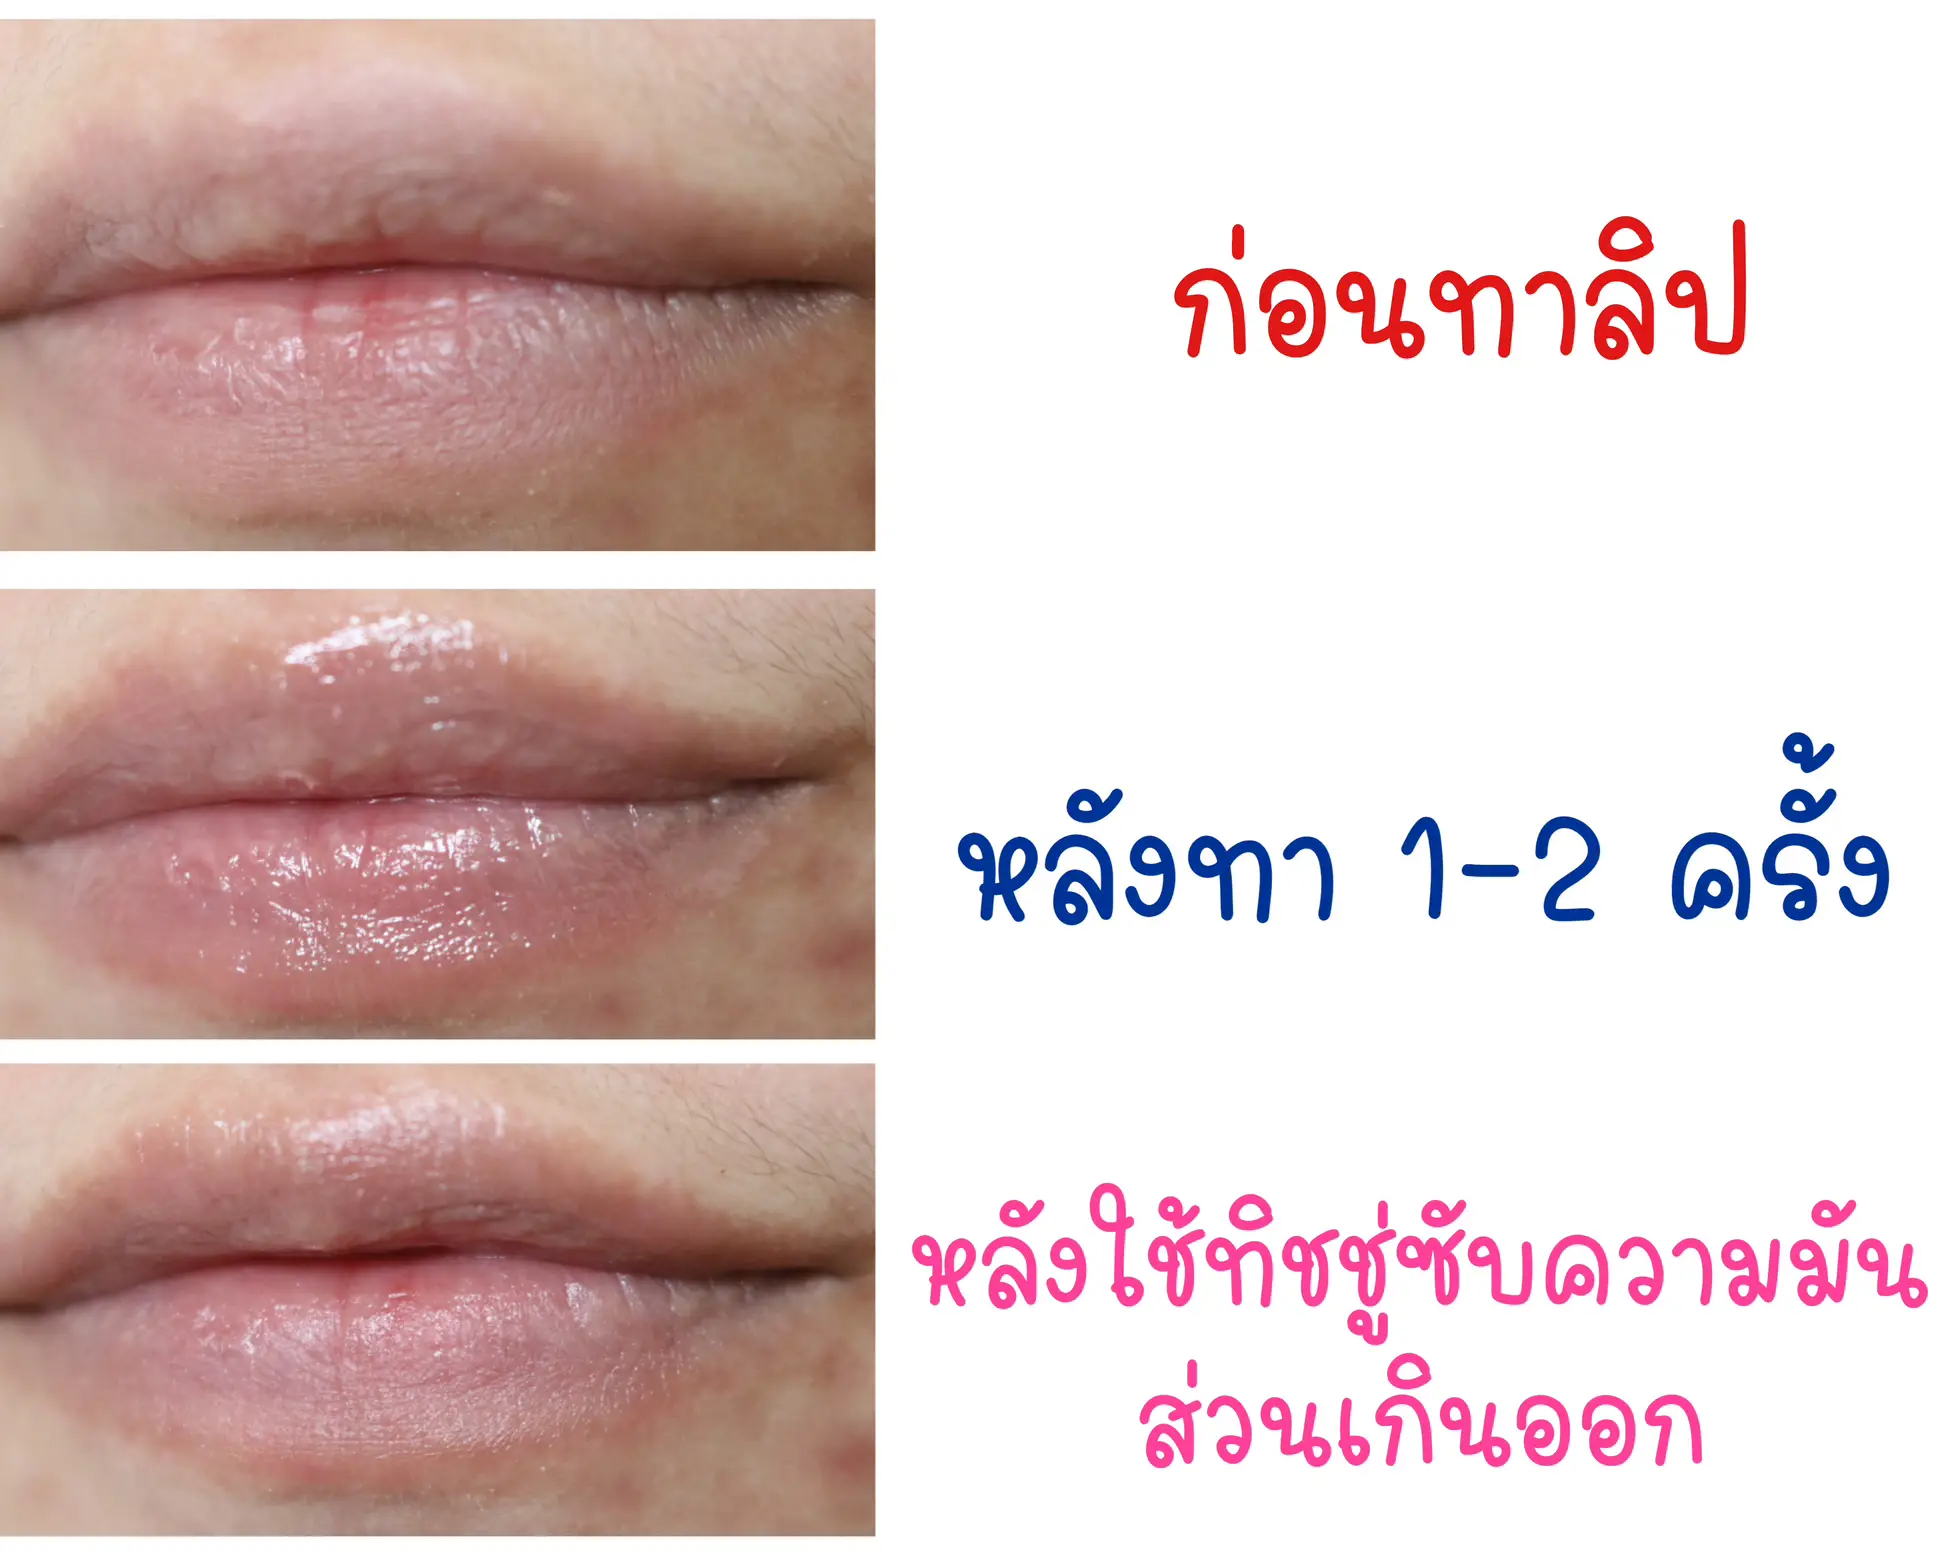  Vaseline Lip Therapy Rosy Lips - Hydrating Lip Balm